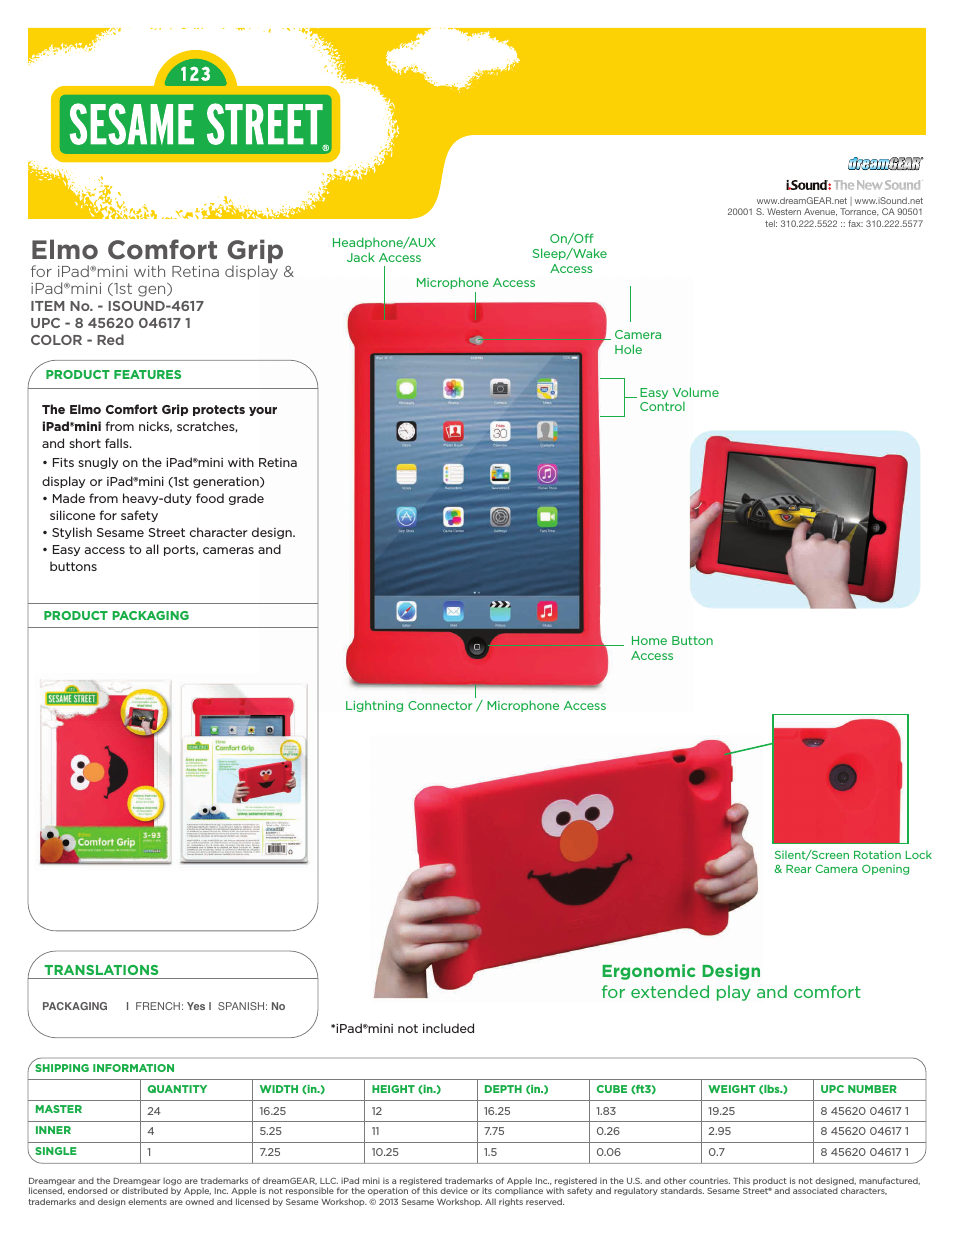 Elmo Comfort Grip for iPadmini - Sell Sheet